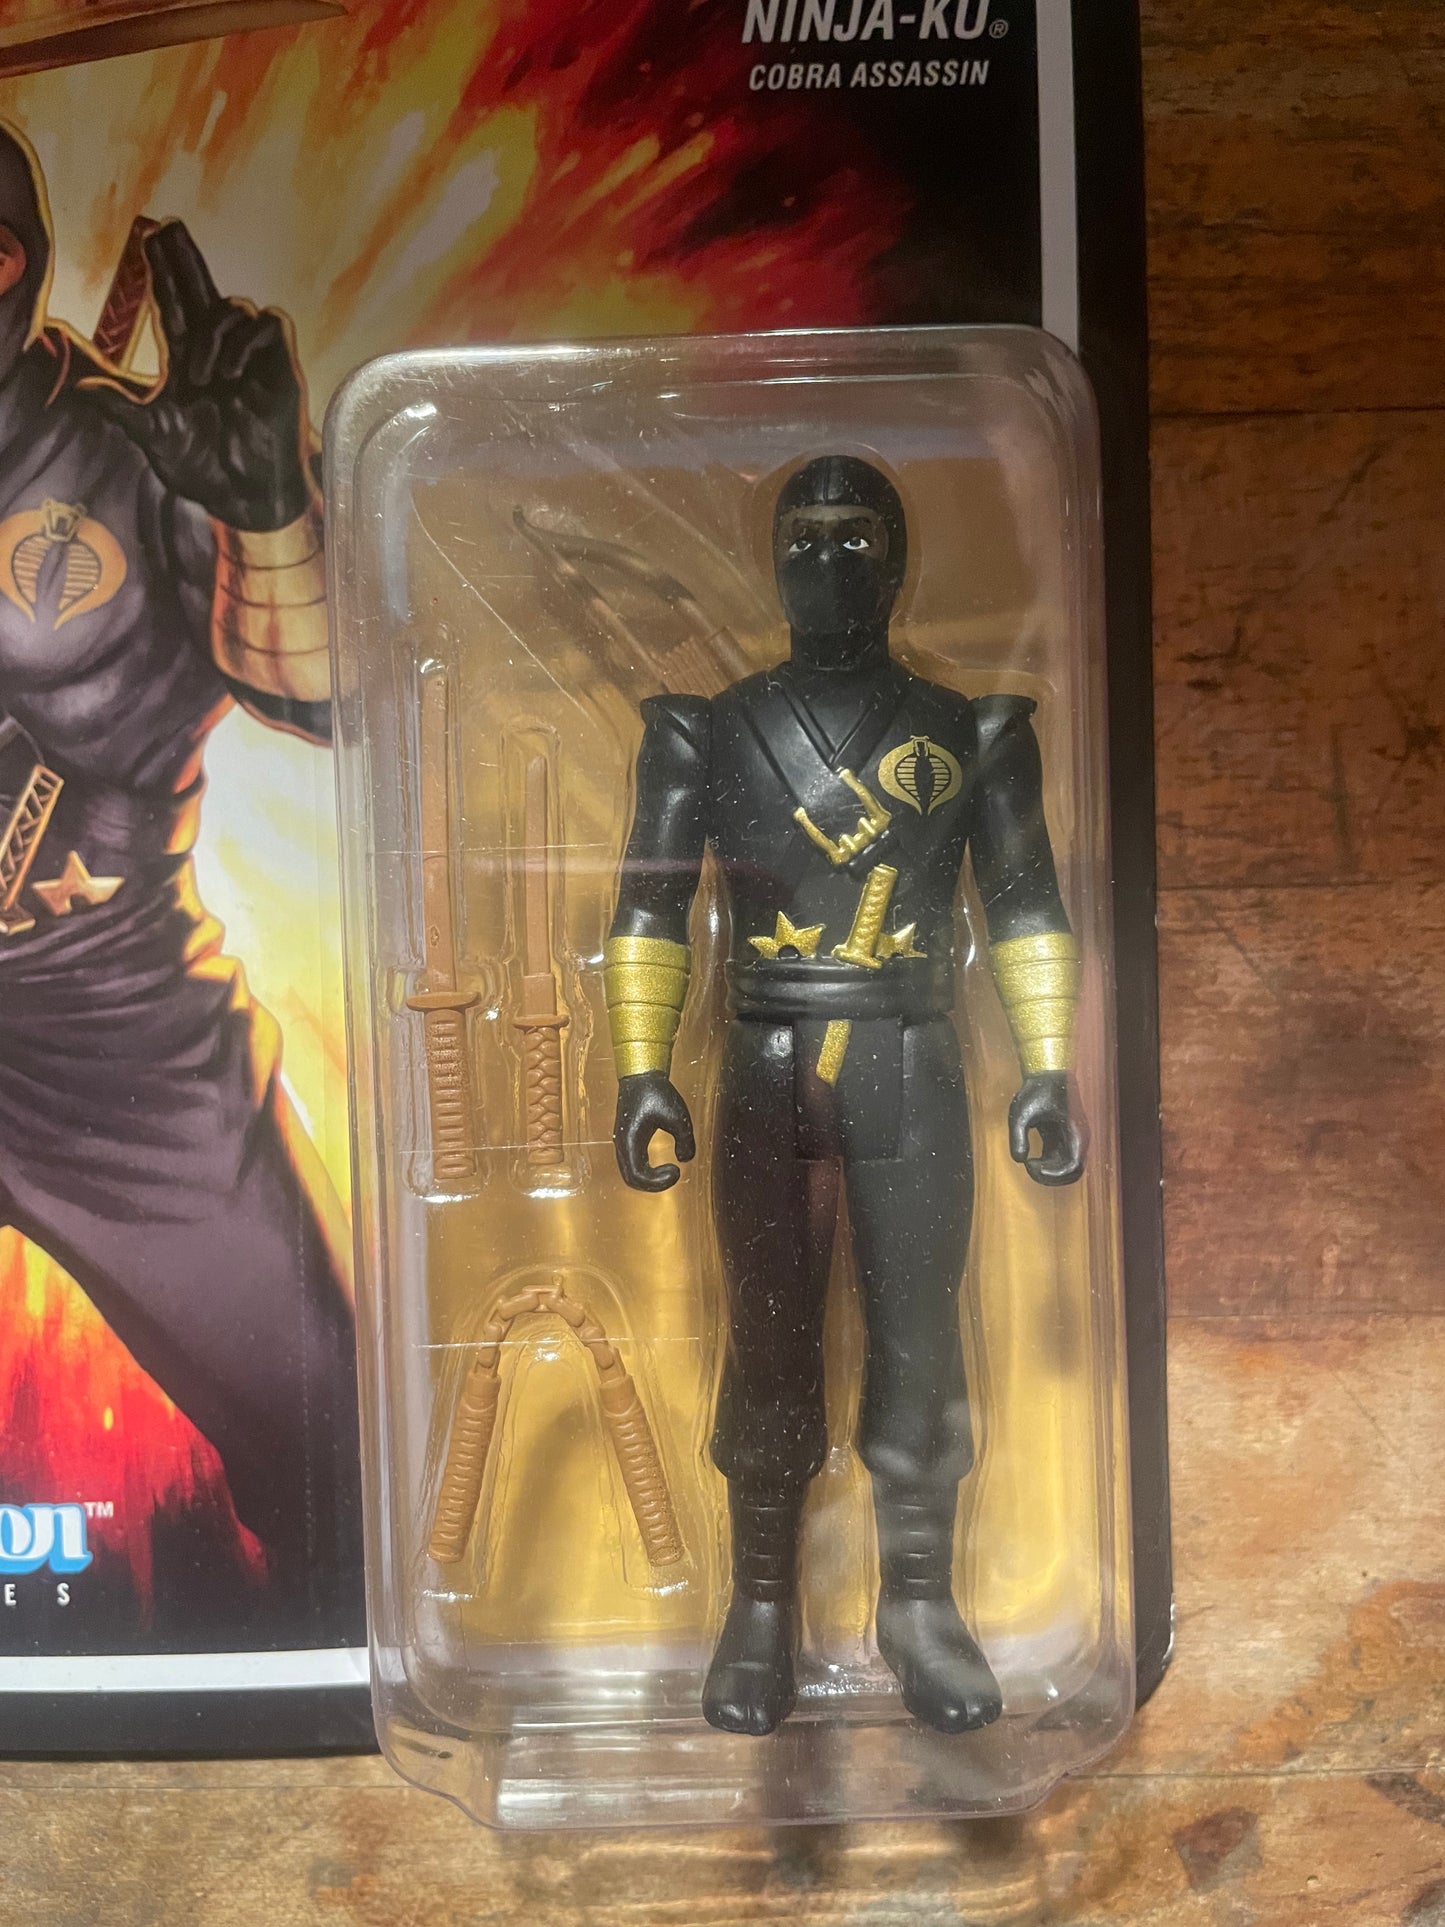 Ninja-Ku Cobra Assassin